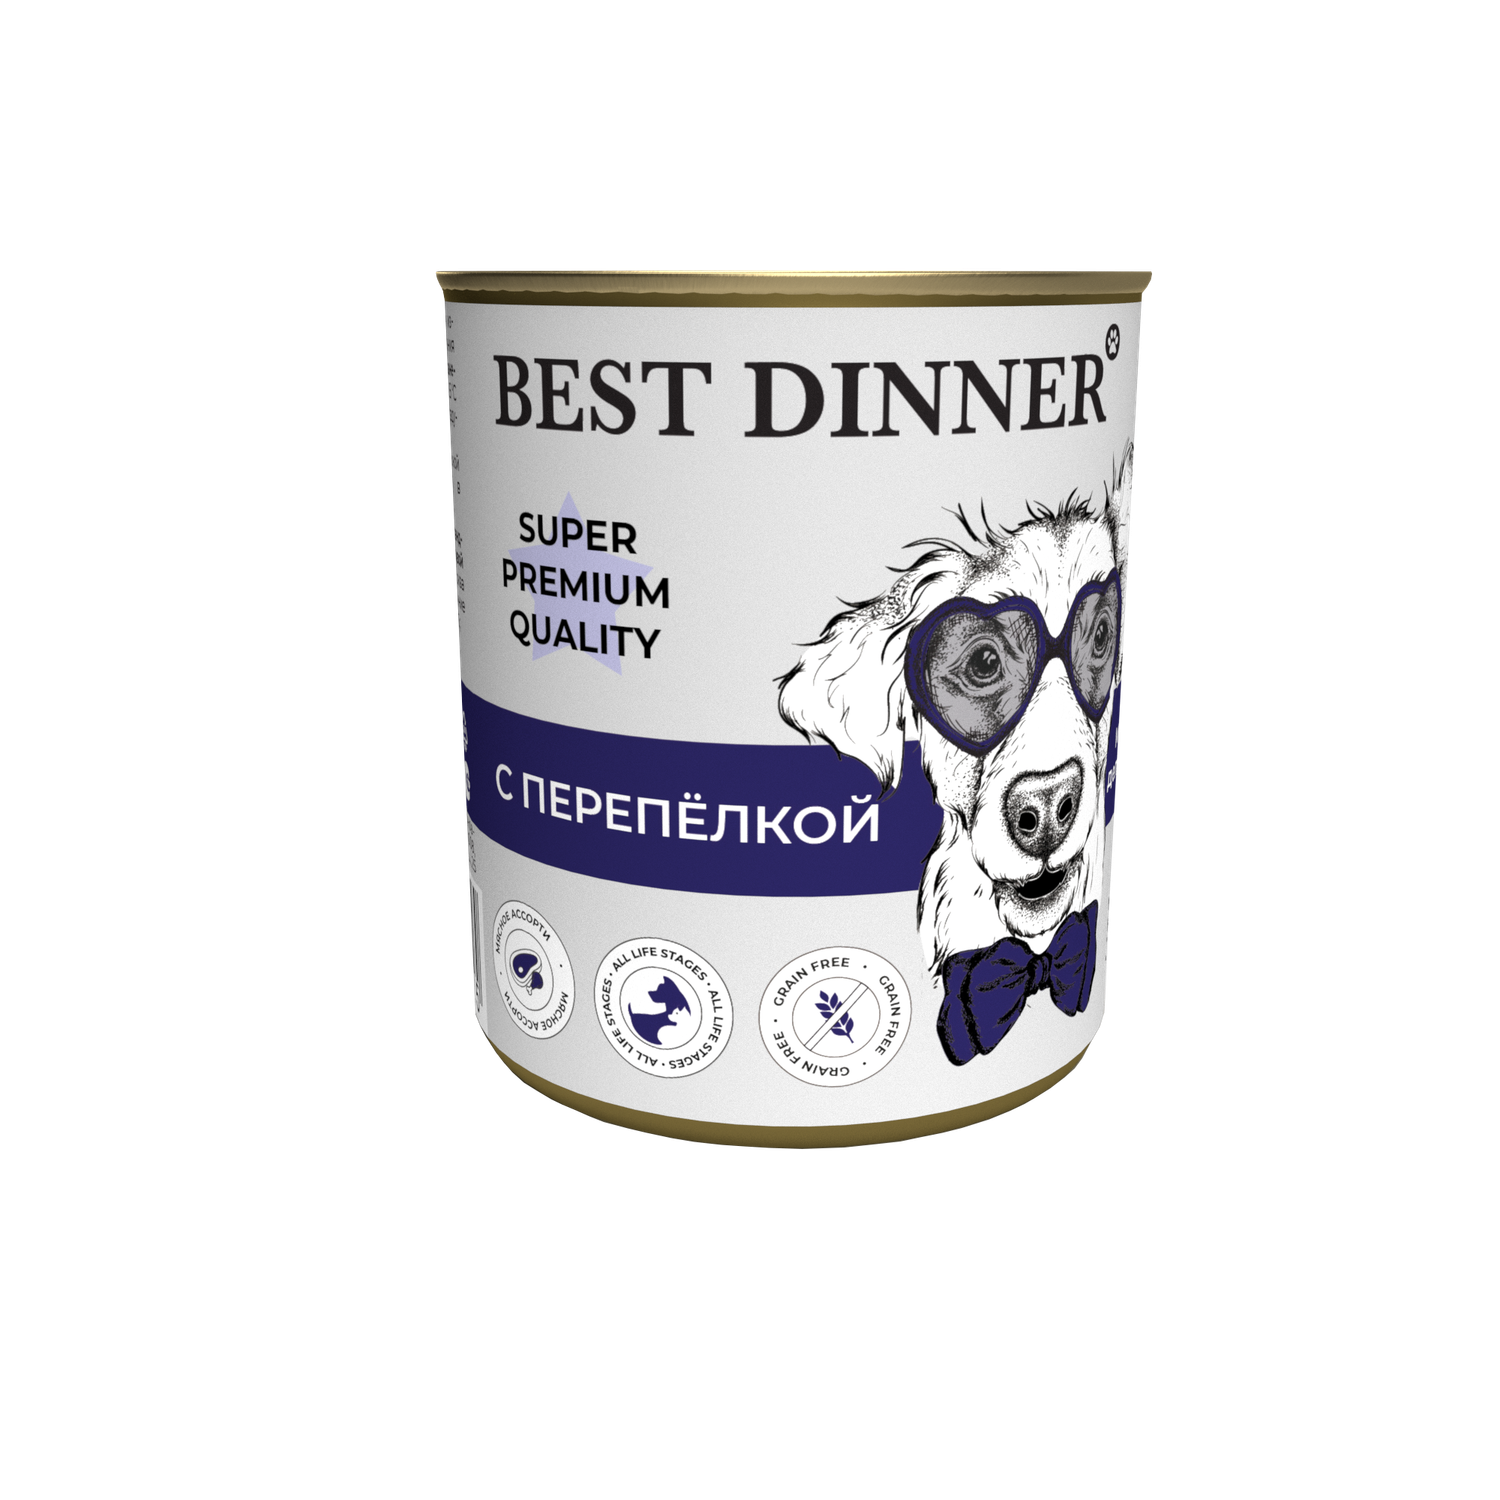 Корм для собак Best Dinner 0.34кг Super Premium с перепелкой - фото 1